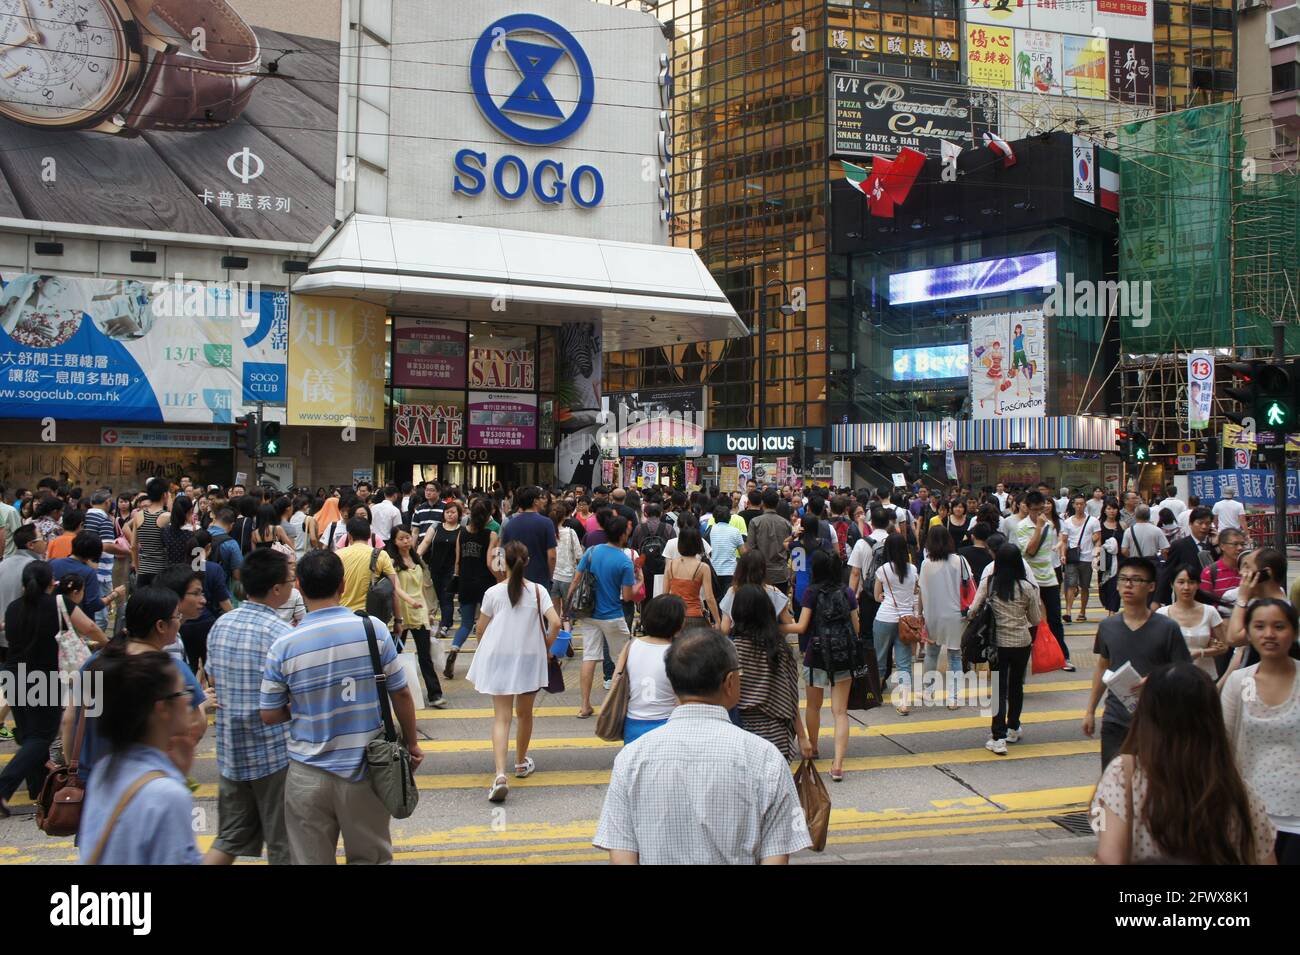 trânsito intenso de pedestres em cruzando do centrocomercial de Hong Kong Stock Photo